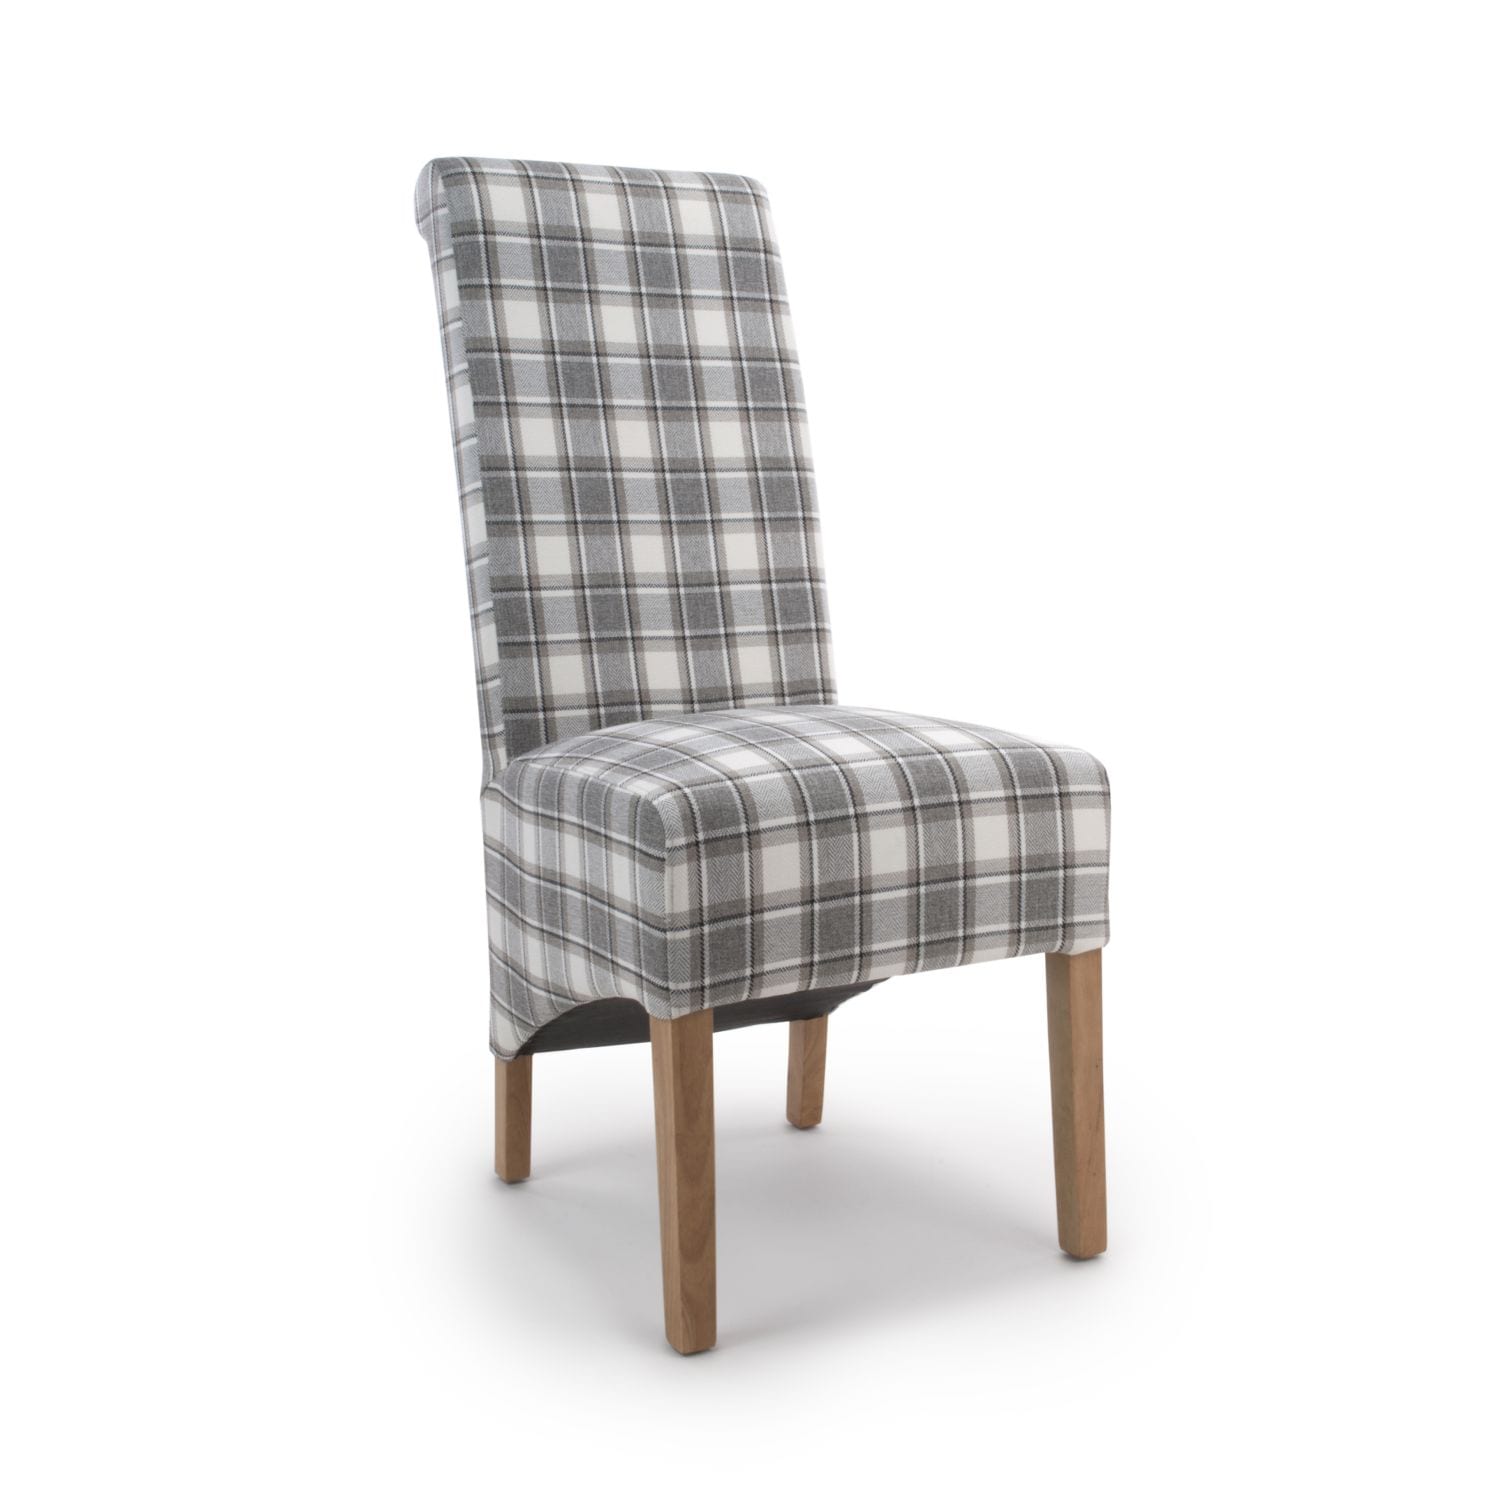 Karren Roll Herringbone Check Cappuccino Chair